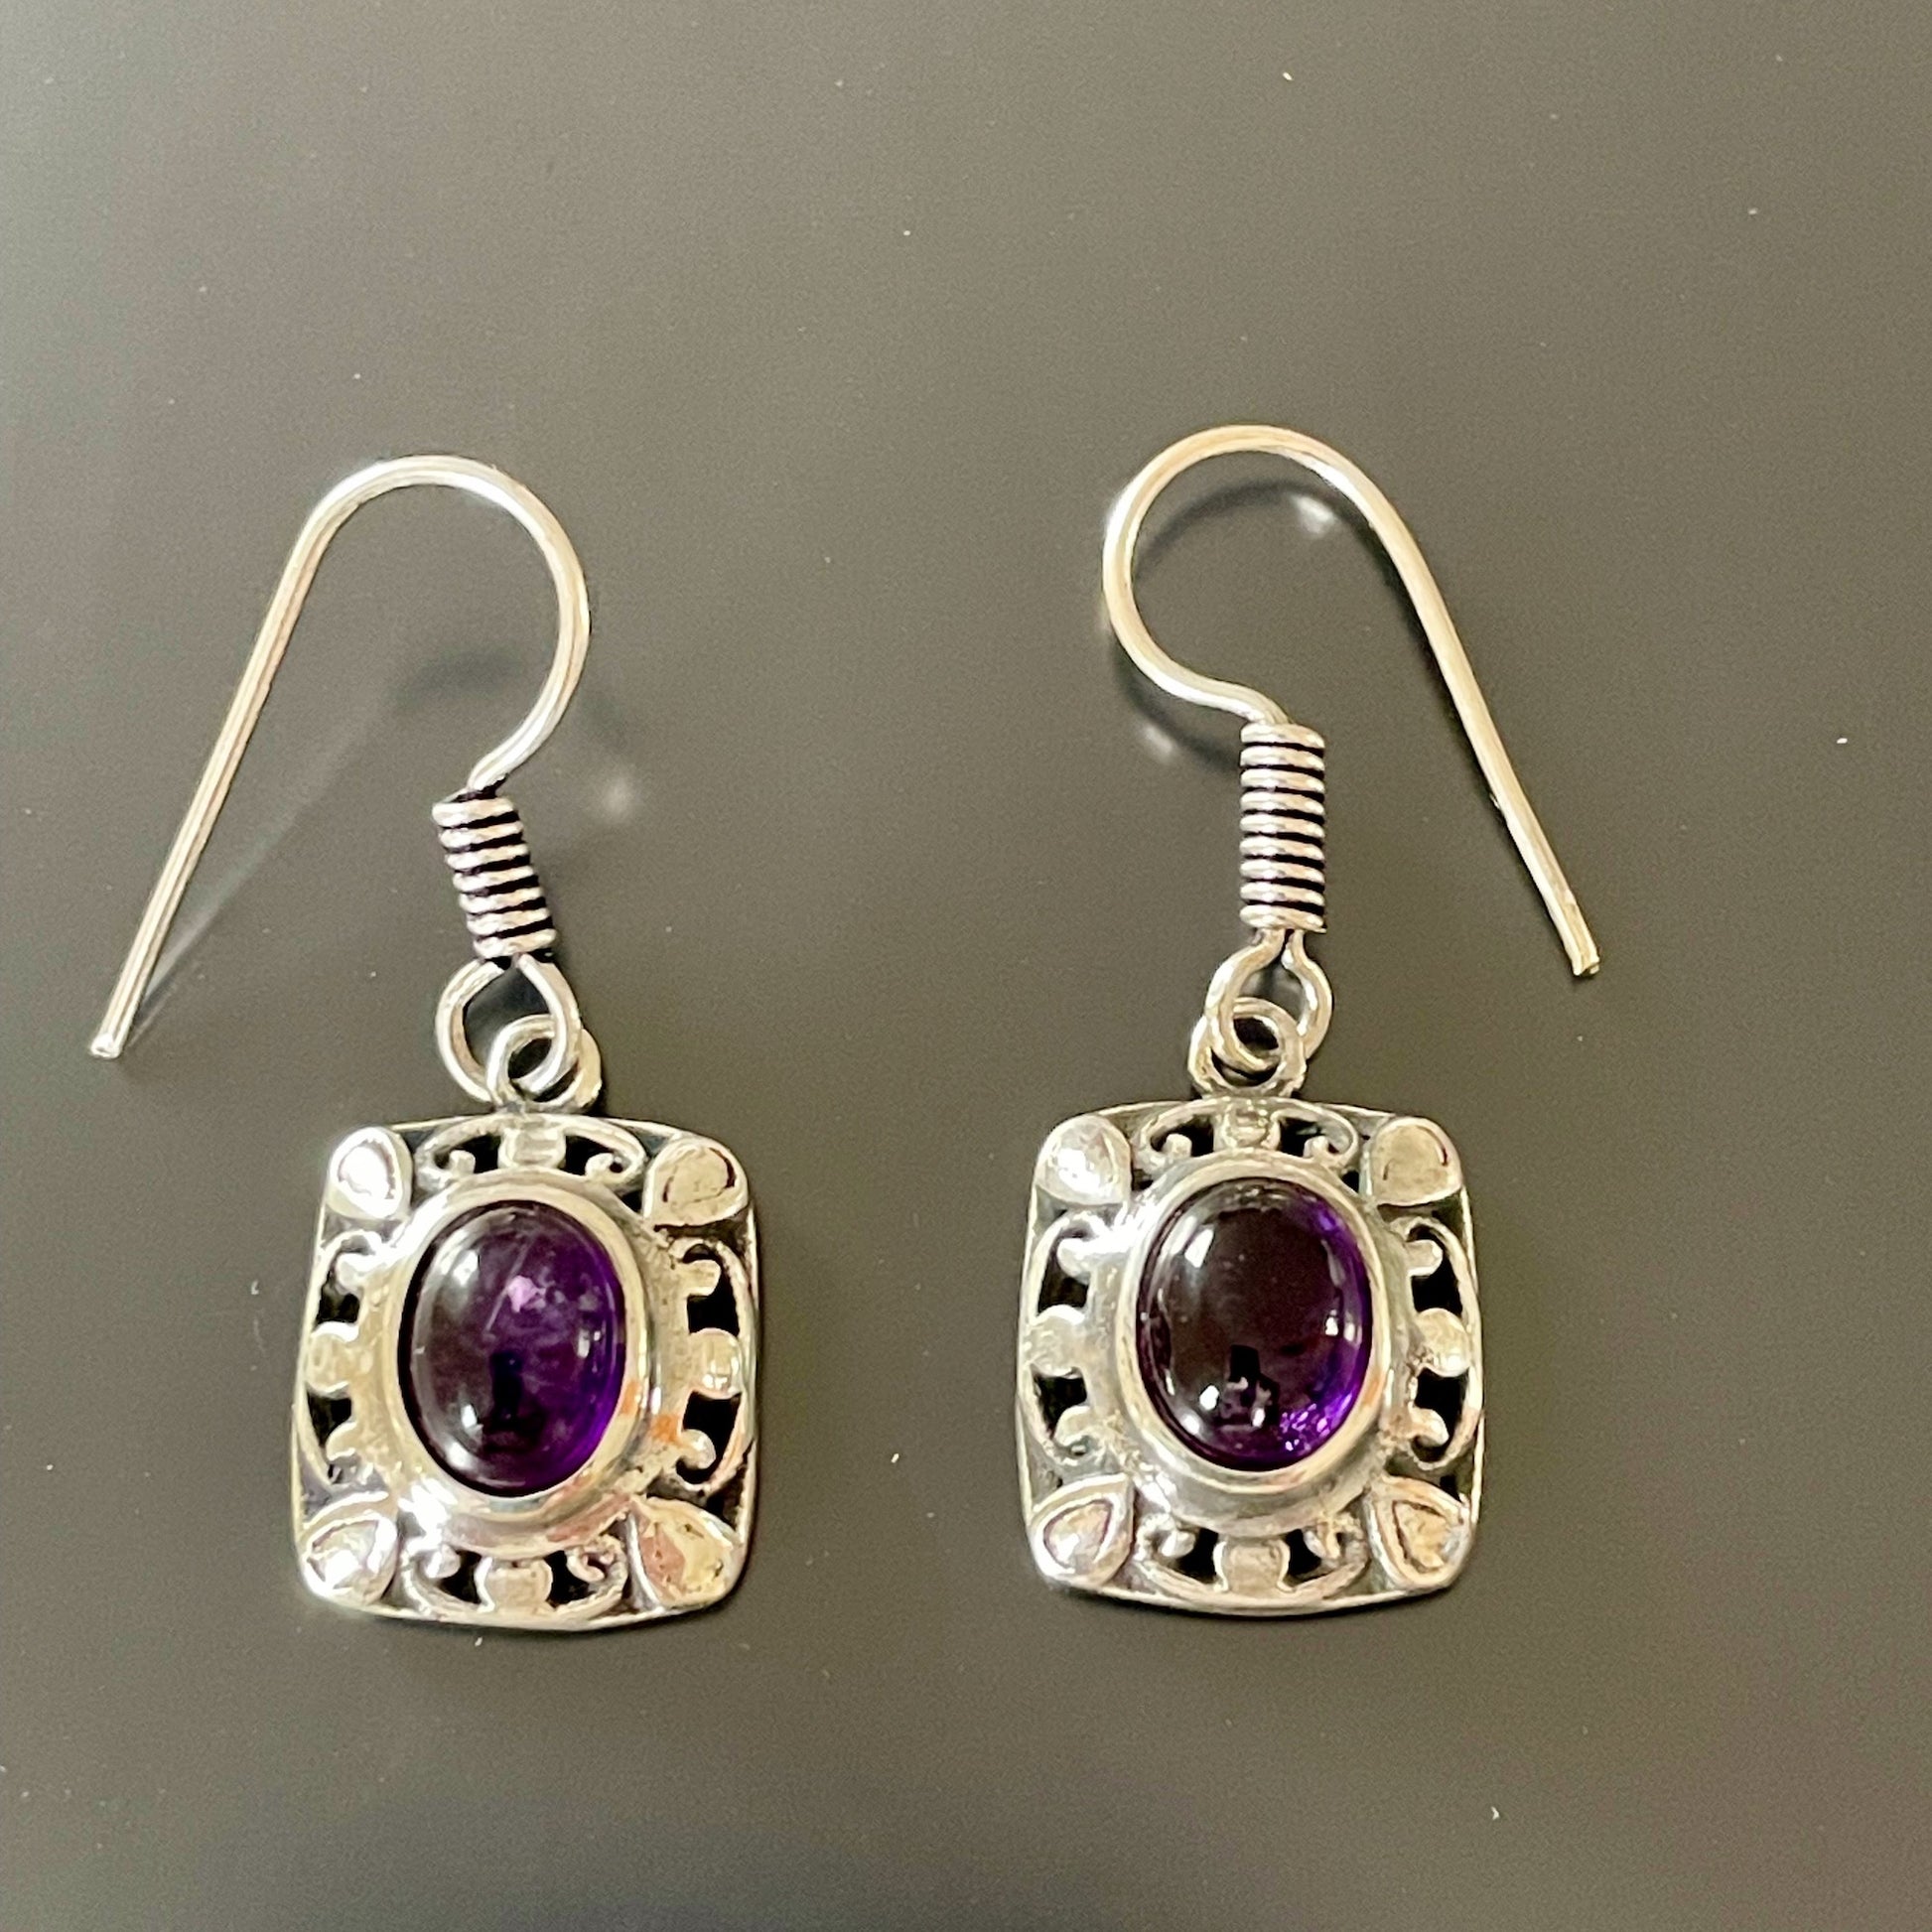 Fretwork Berber Silver Earrings with Oval purple Stones